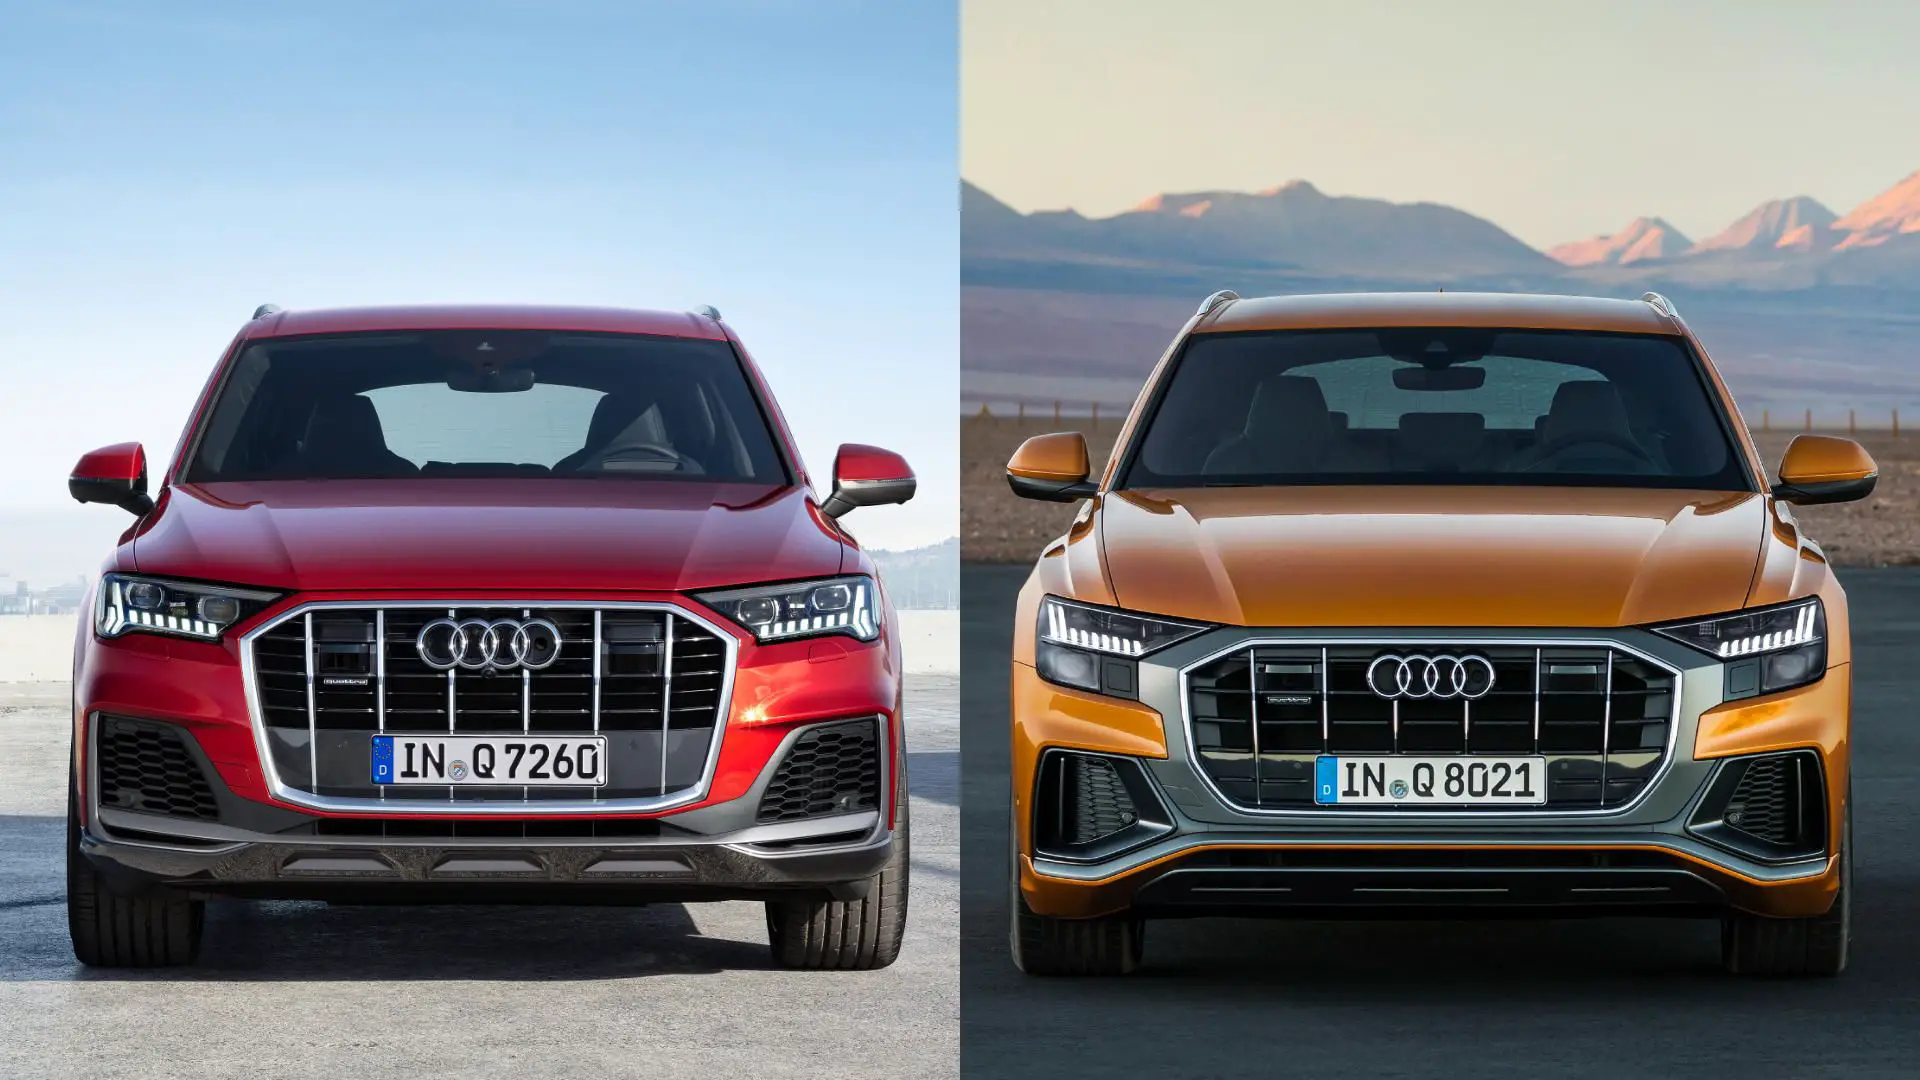 Audi Q7 vs Q8 comparison